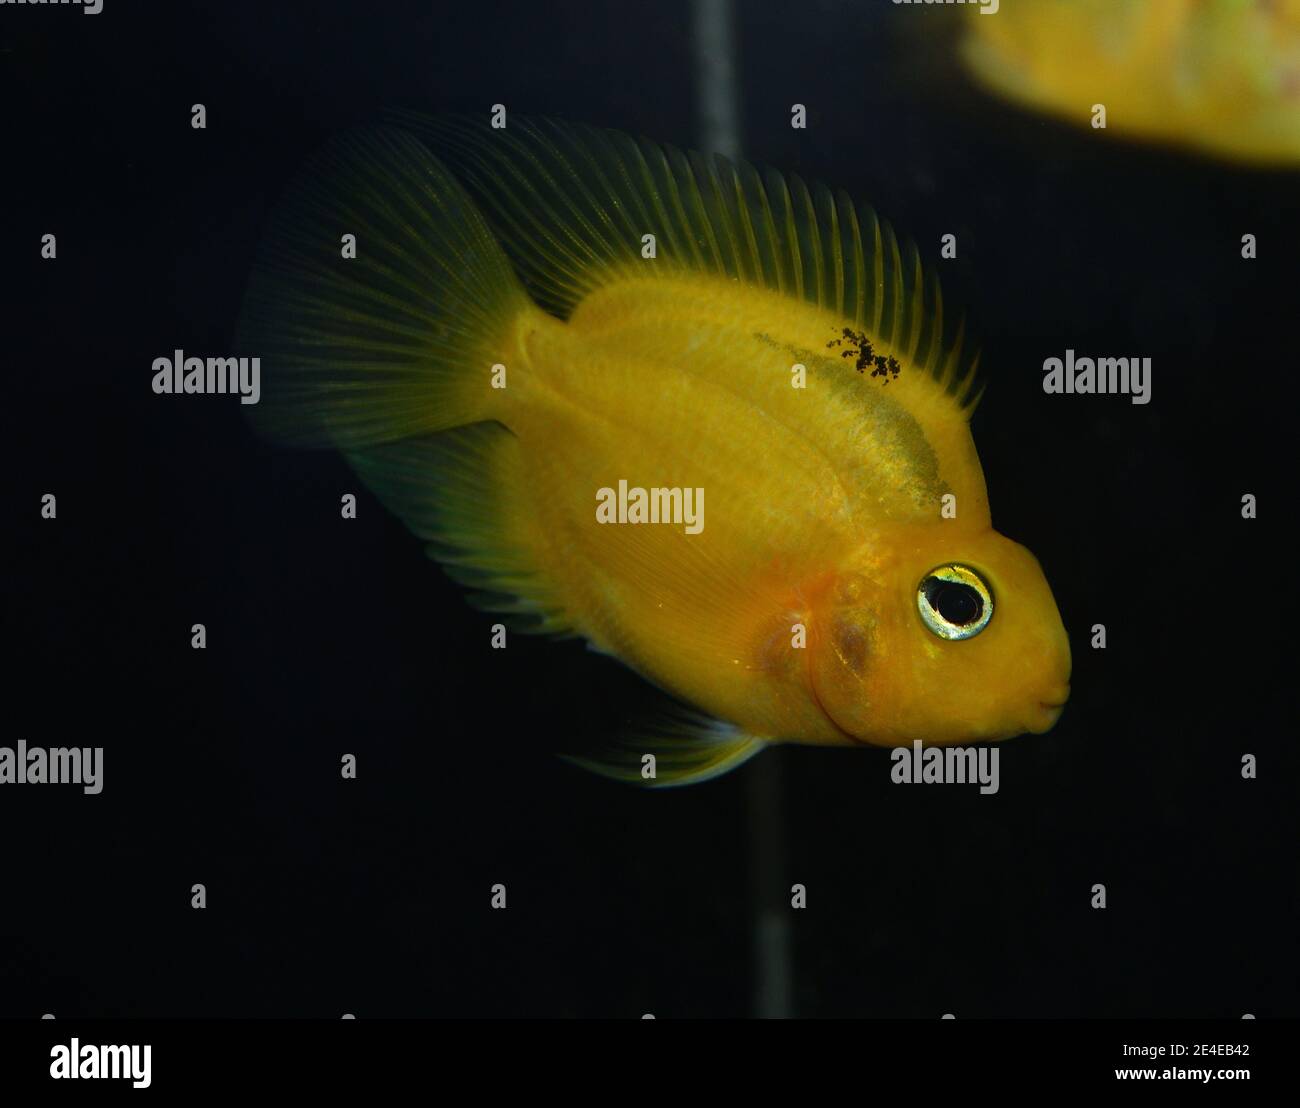 Parrot fish swimming in freshwater aquarium Stock Photo